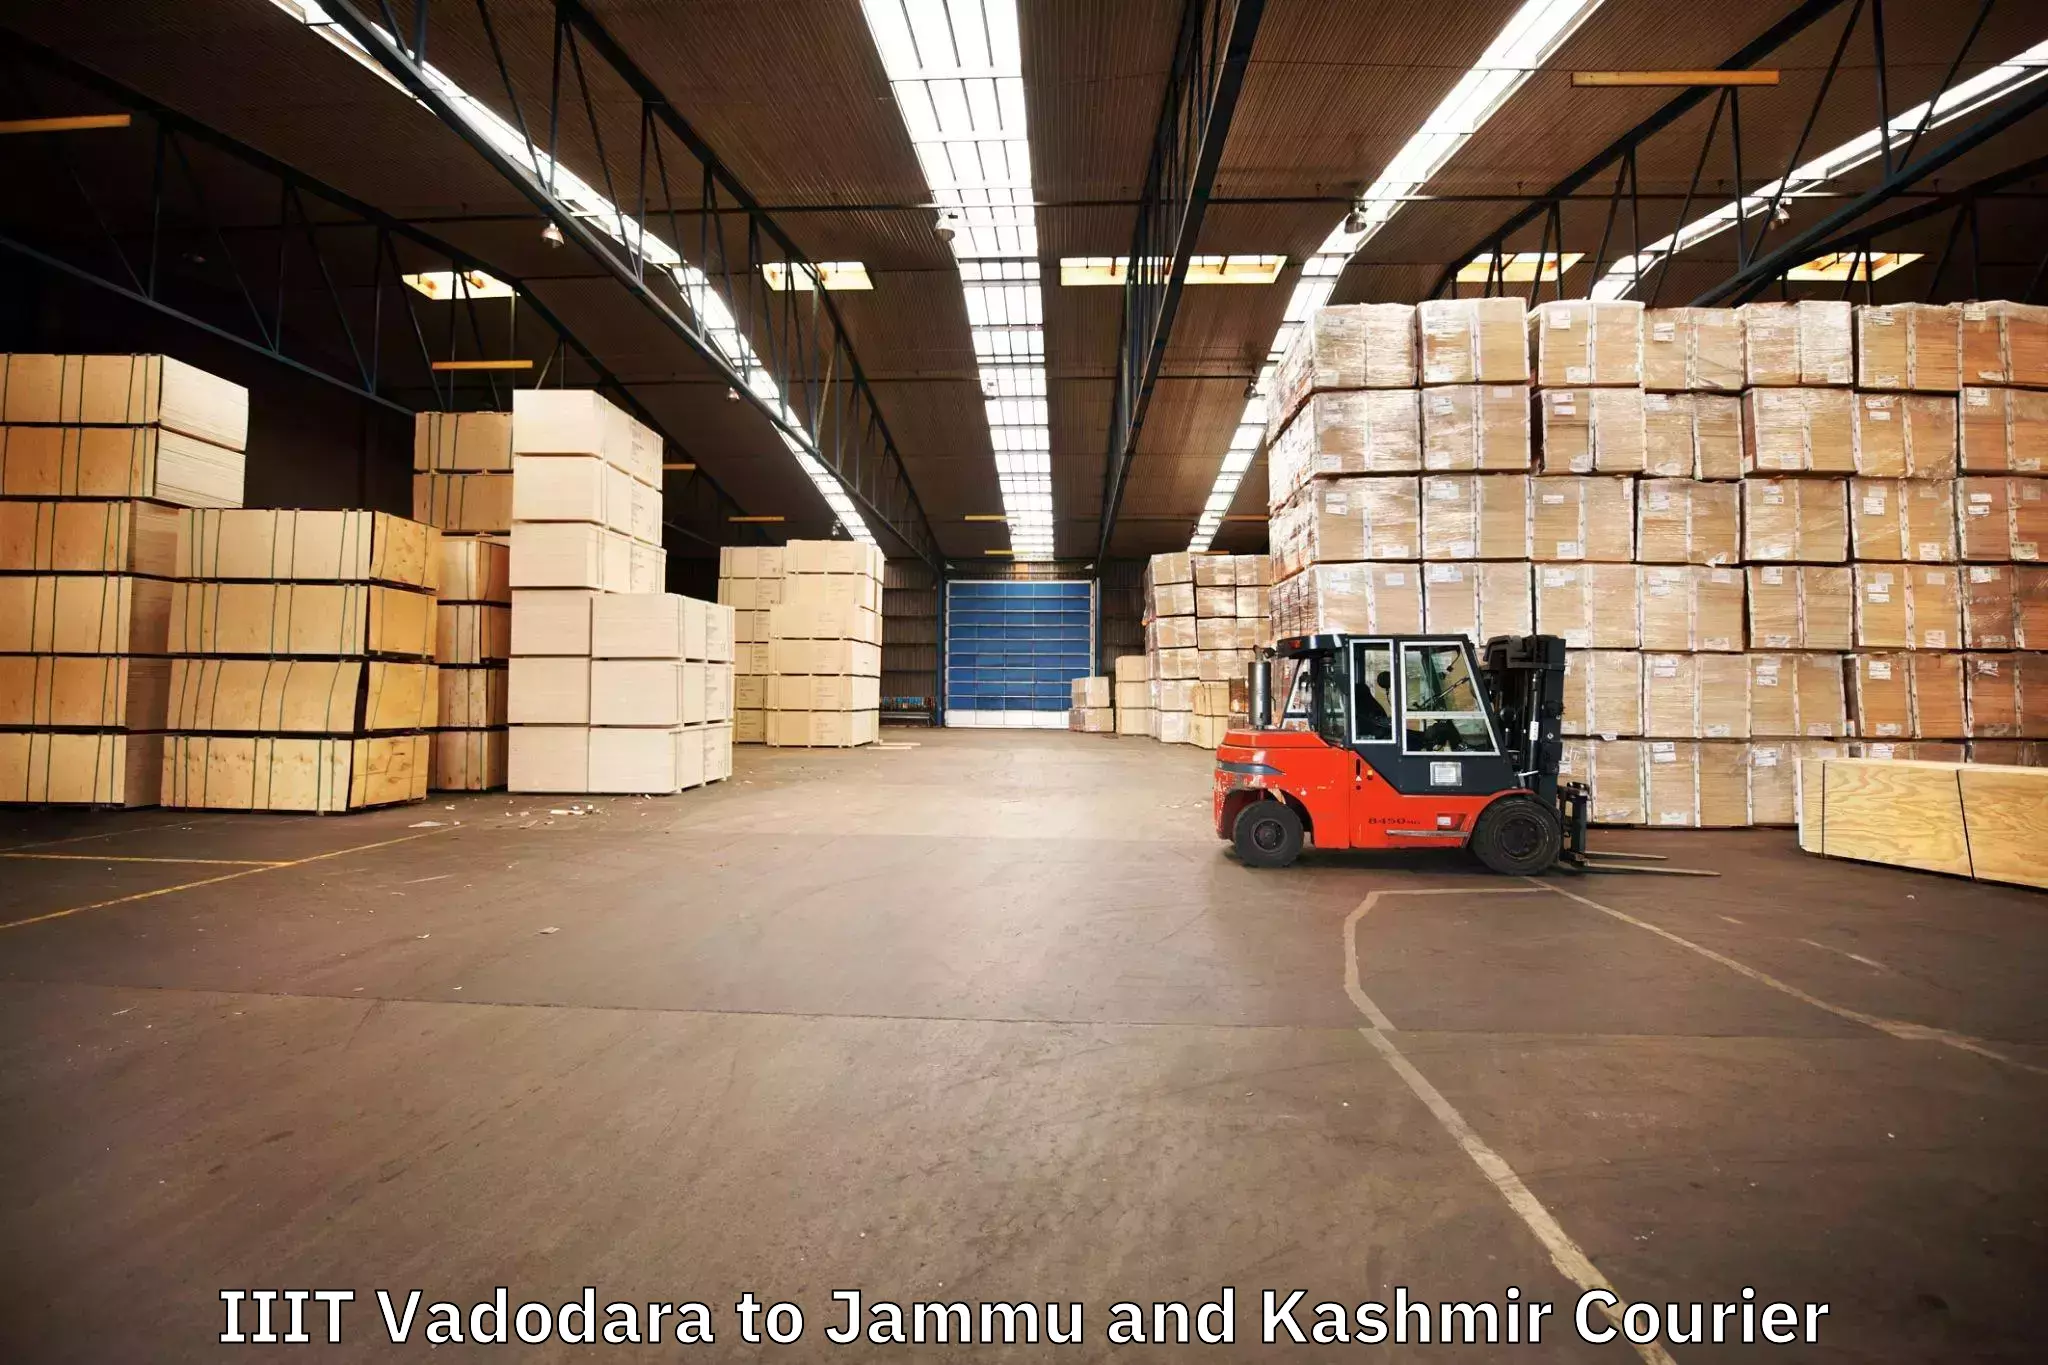 Efficient moving company IIIT Vadodara to Srinagar Kashmir